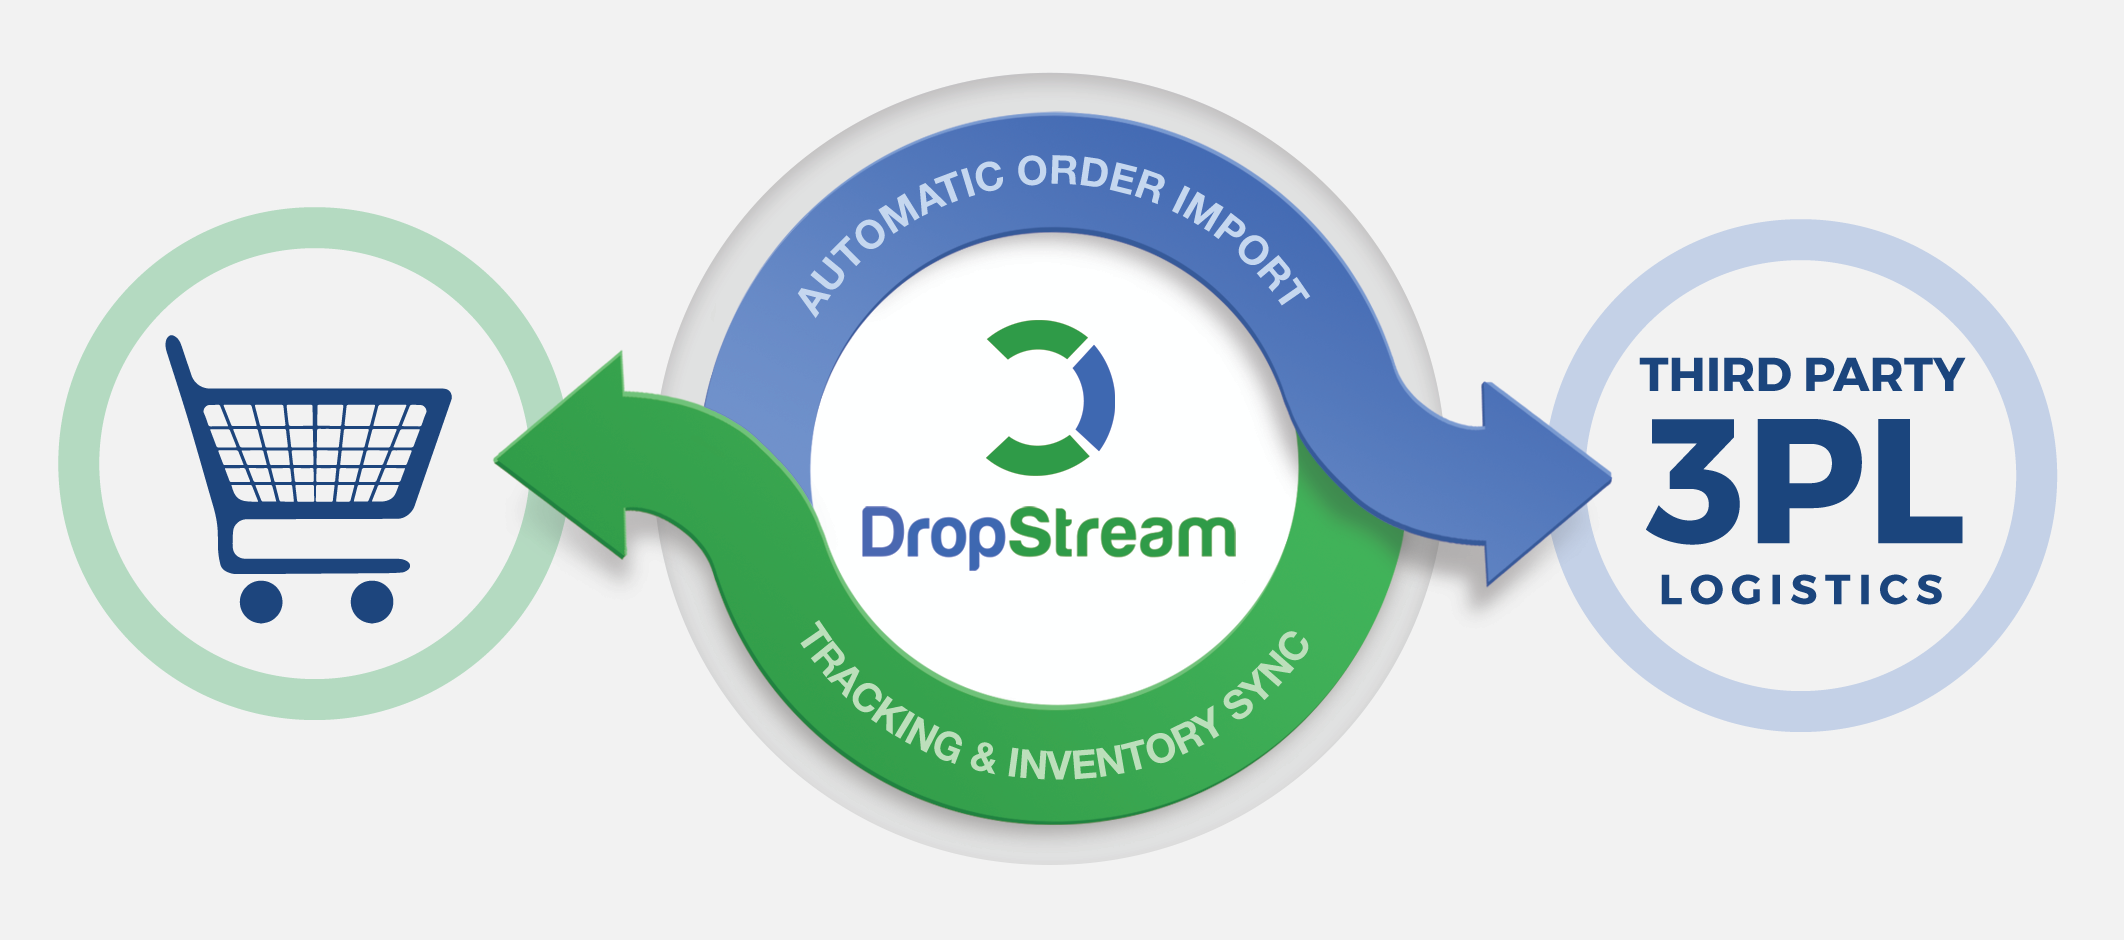 DropStream workflow diagram.png